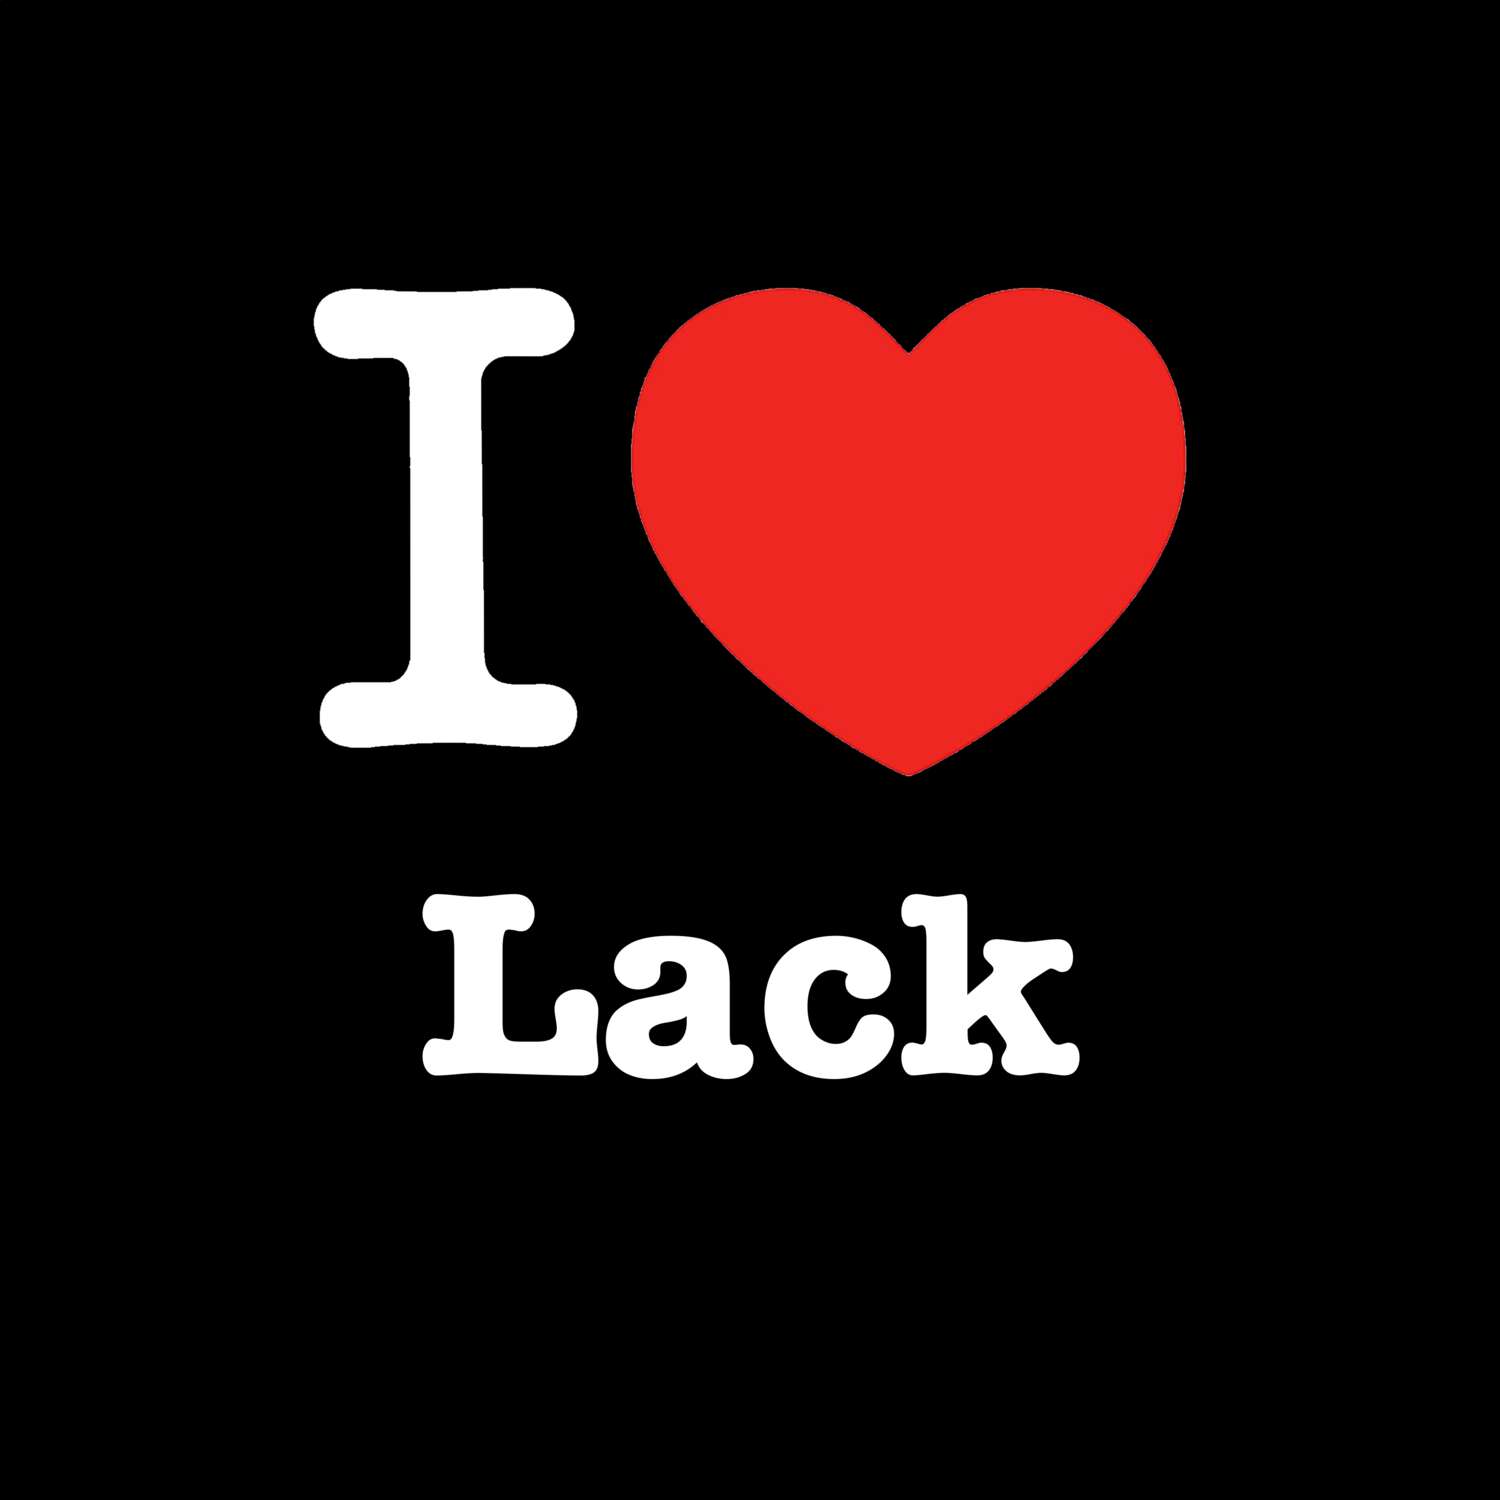 Lack T-Shirt »I love«